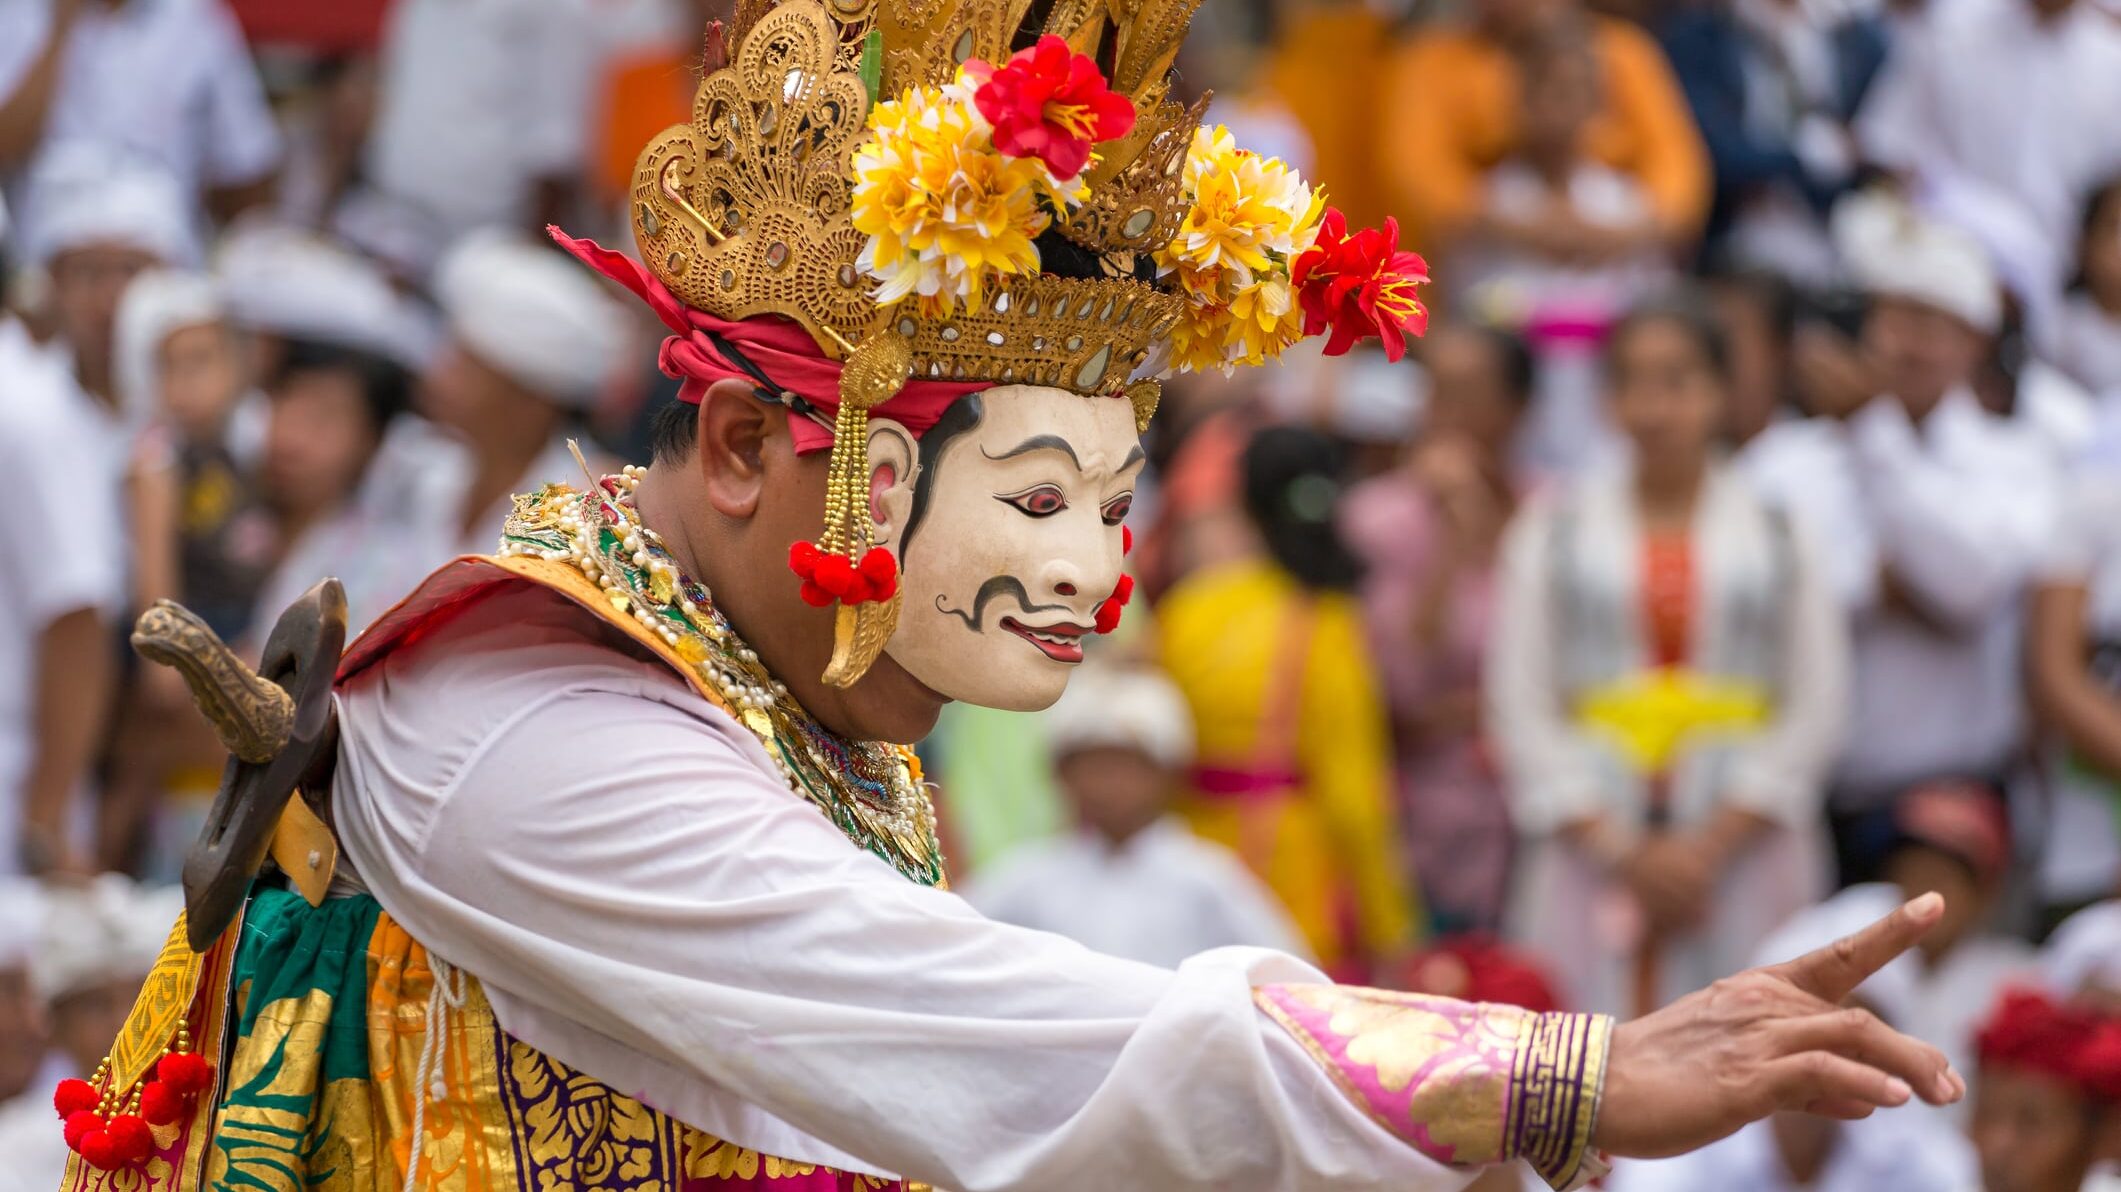 Galungan celebration in Ubud, Bali